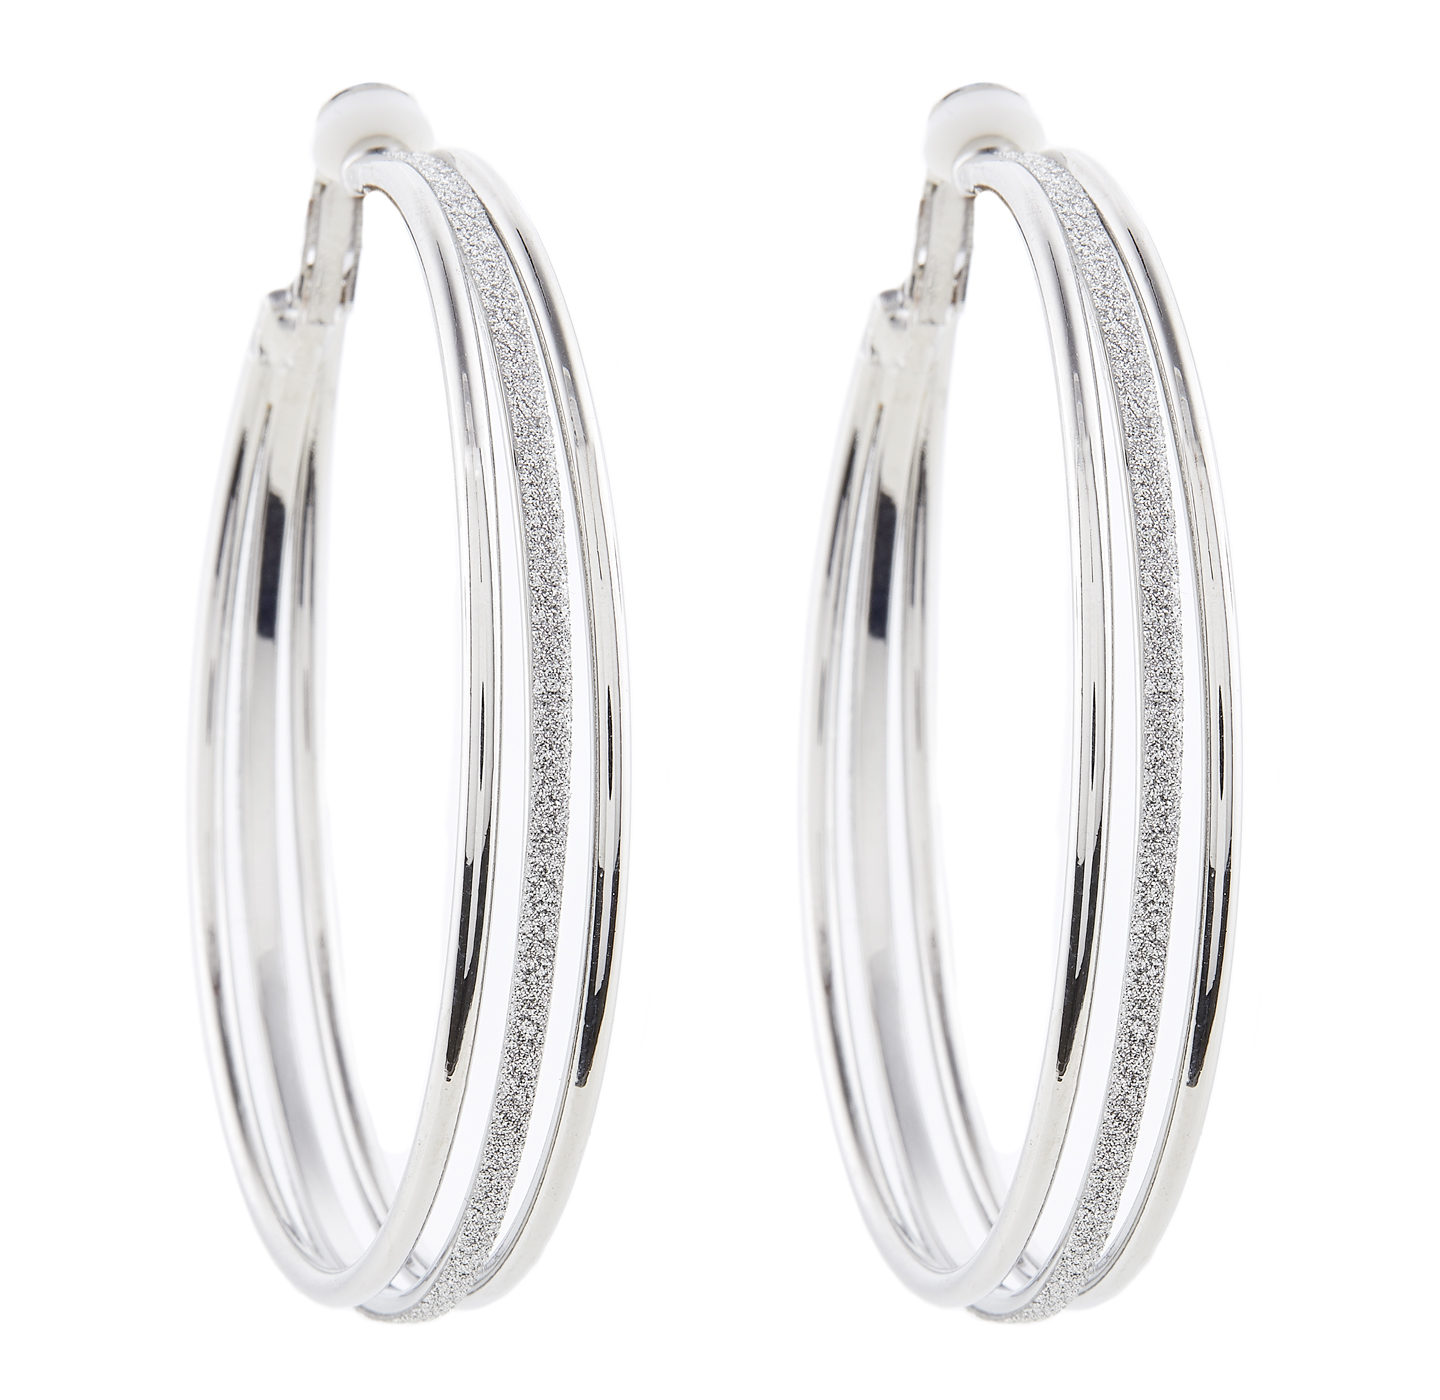 Clip On Hoop Earrings - Kanda S - silver earring with three hoops